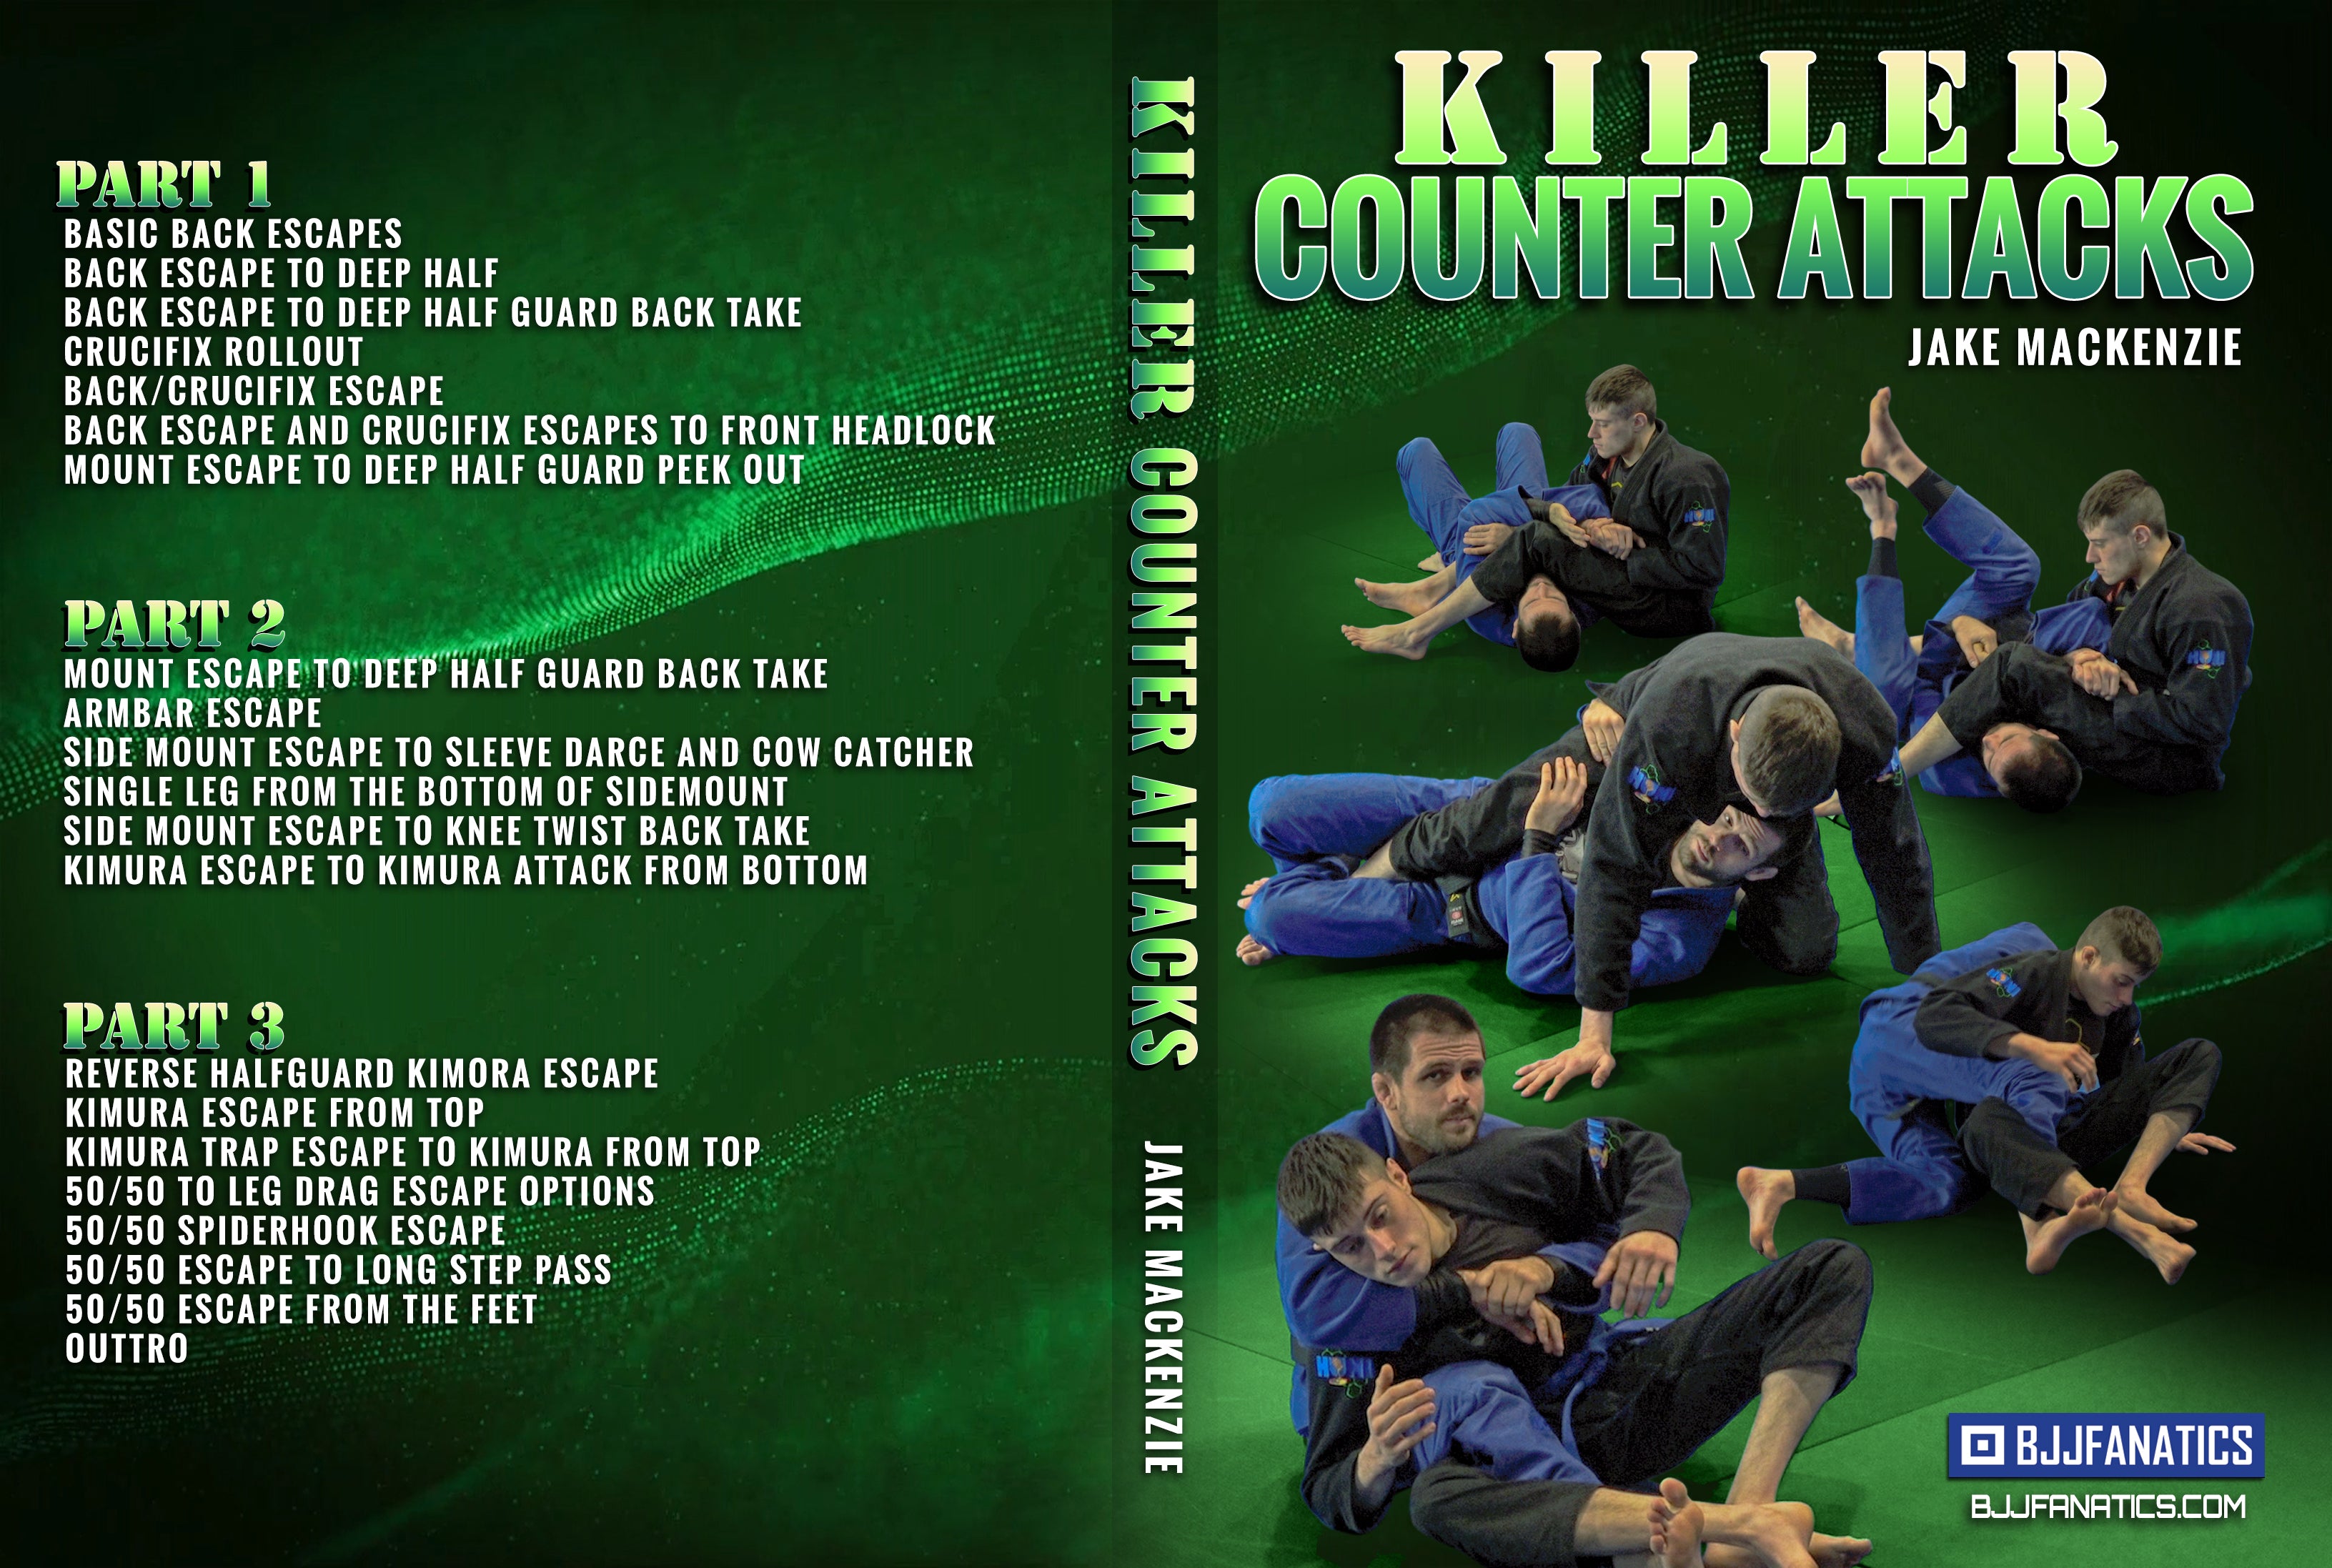 Killer Counter Attacks by Jake Mackenzie - Digital